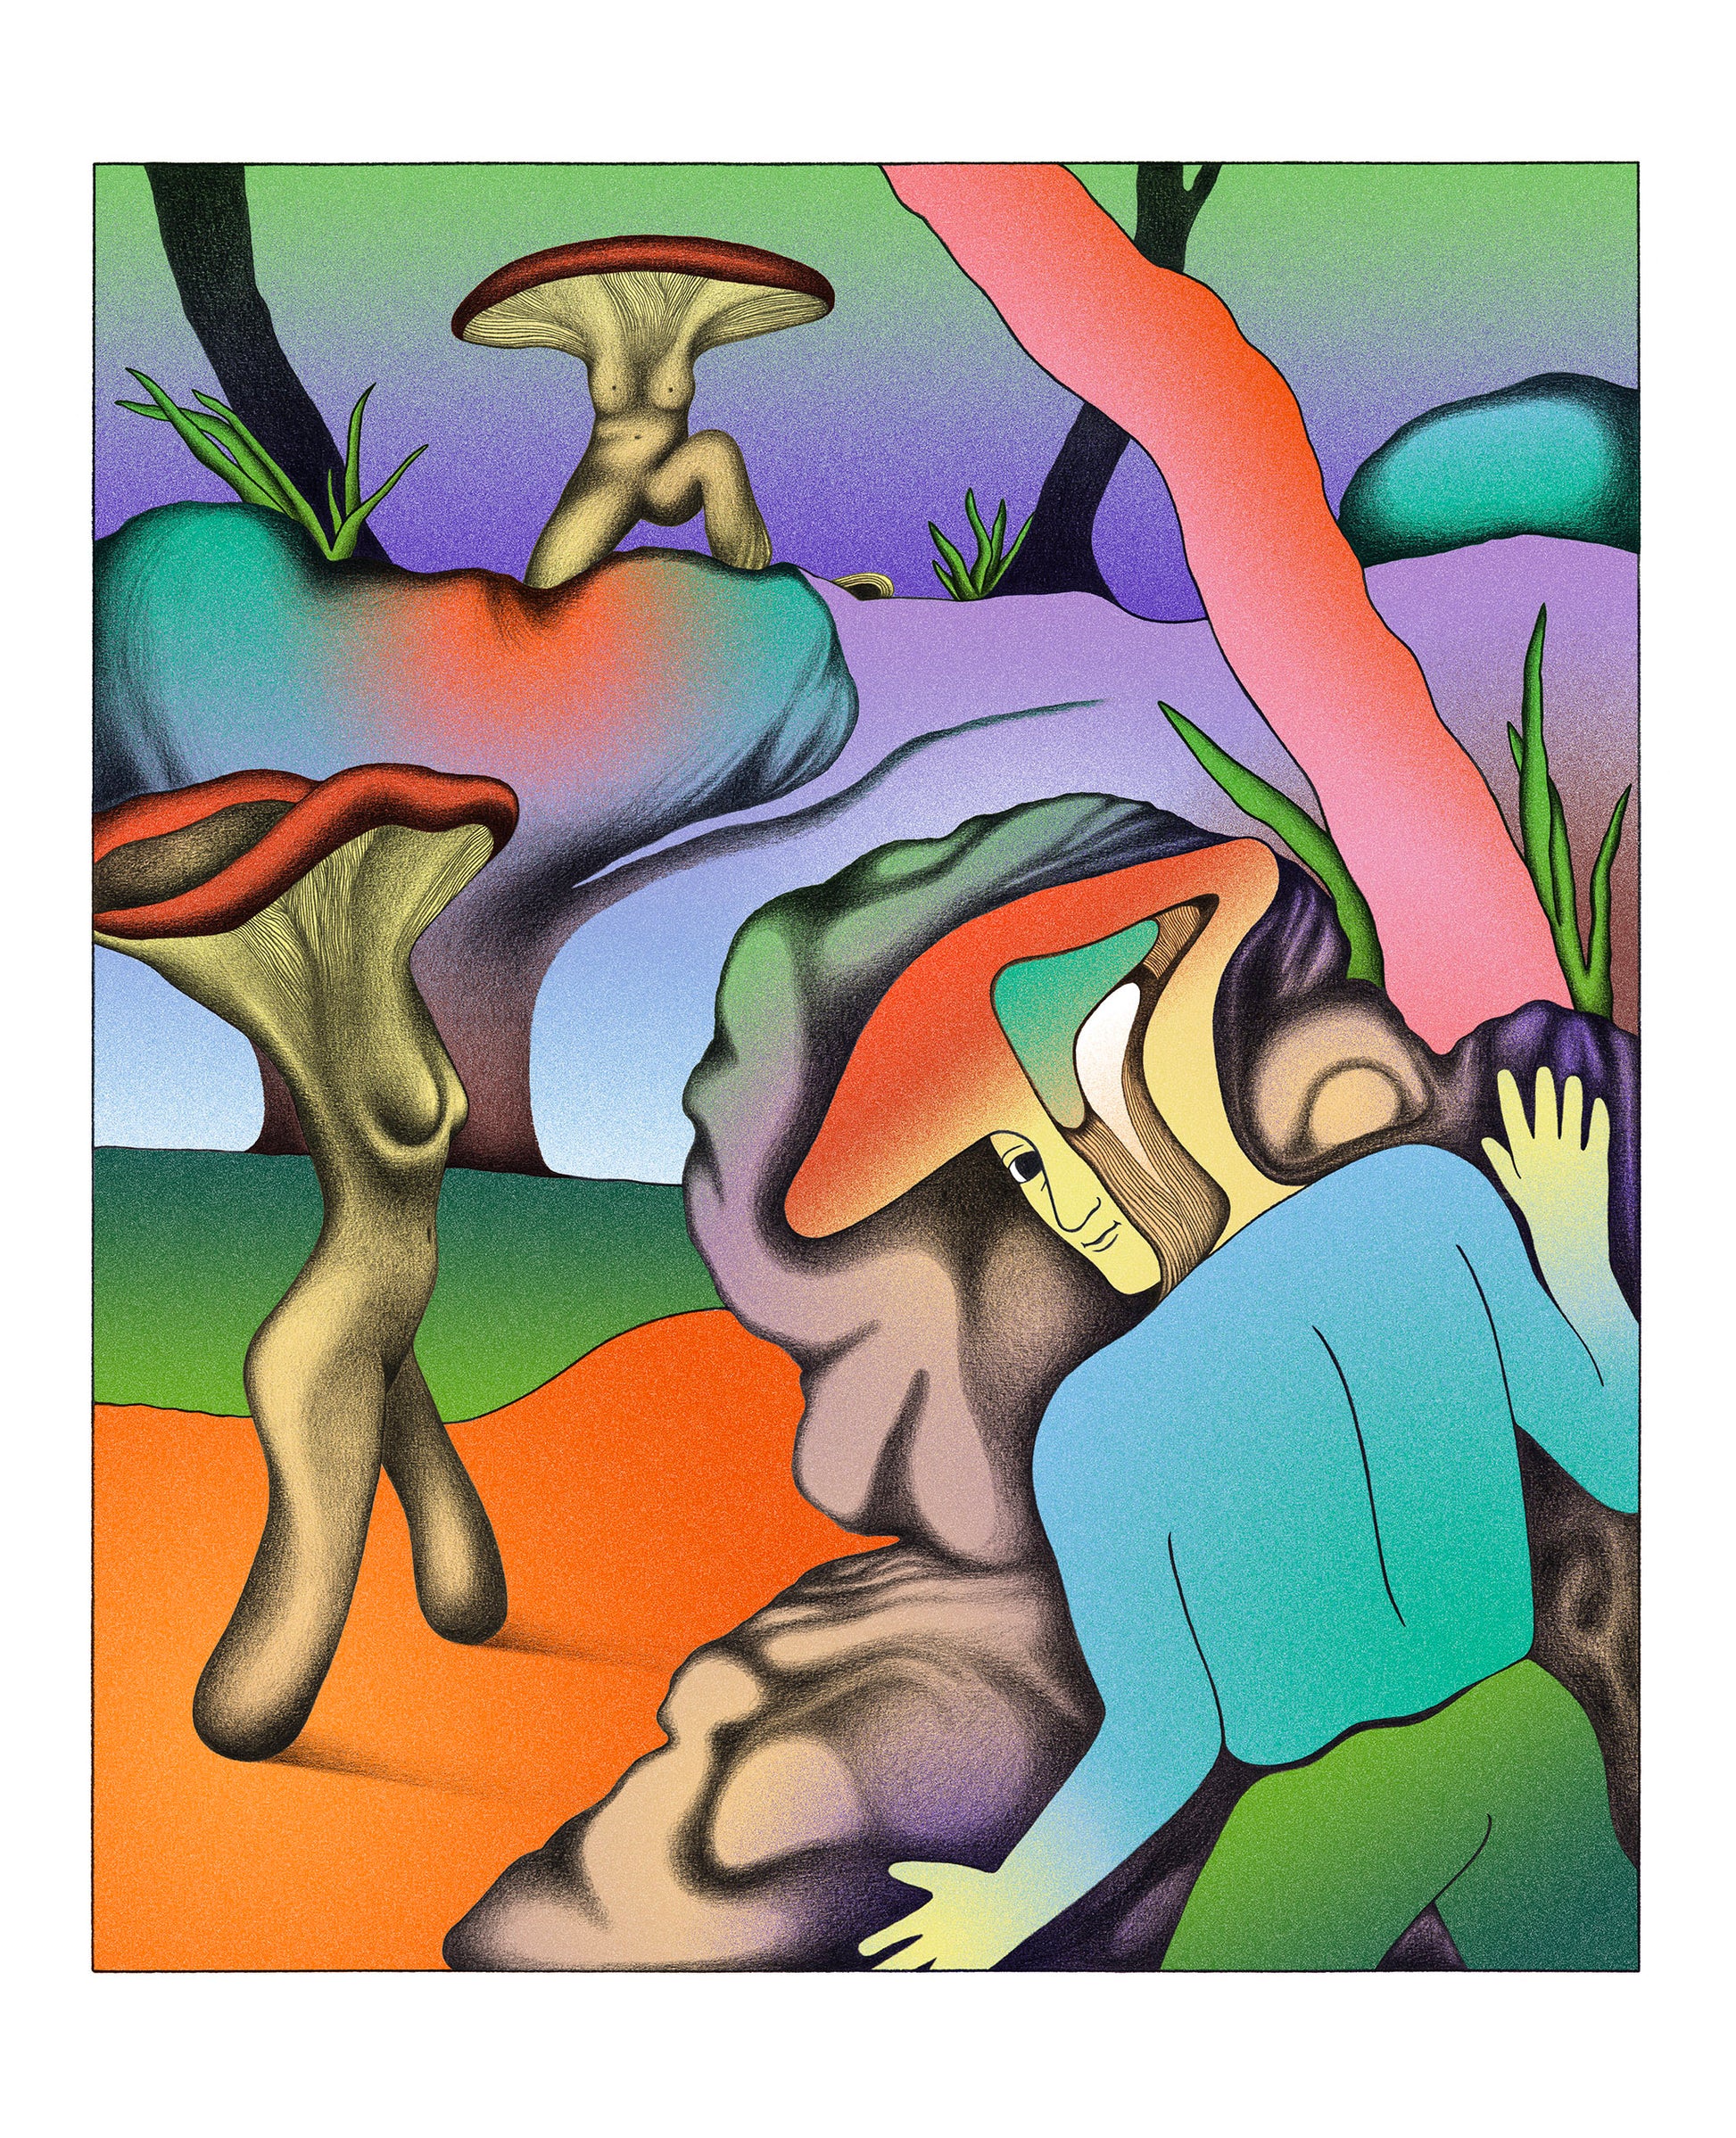 Dessin d'une scène voyeuriste, faite de personnage-champignon de Linda Merad. Fond spray multicolore.